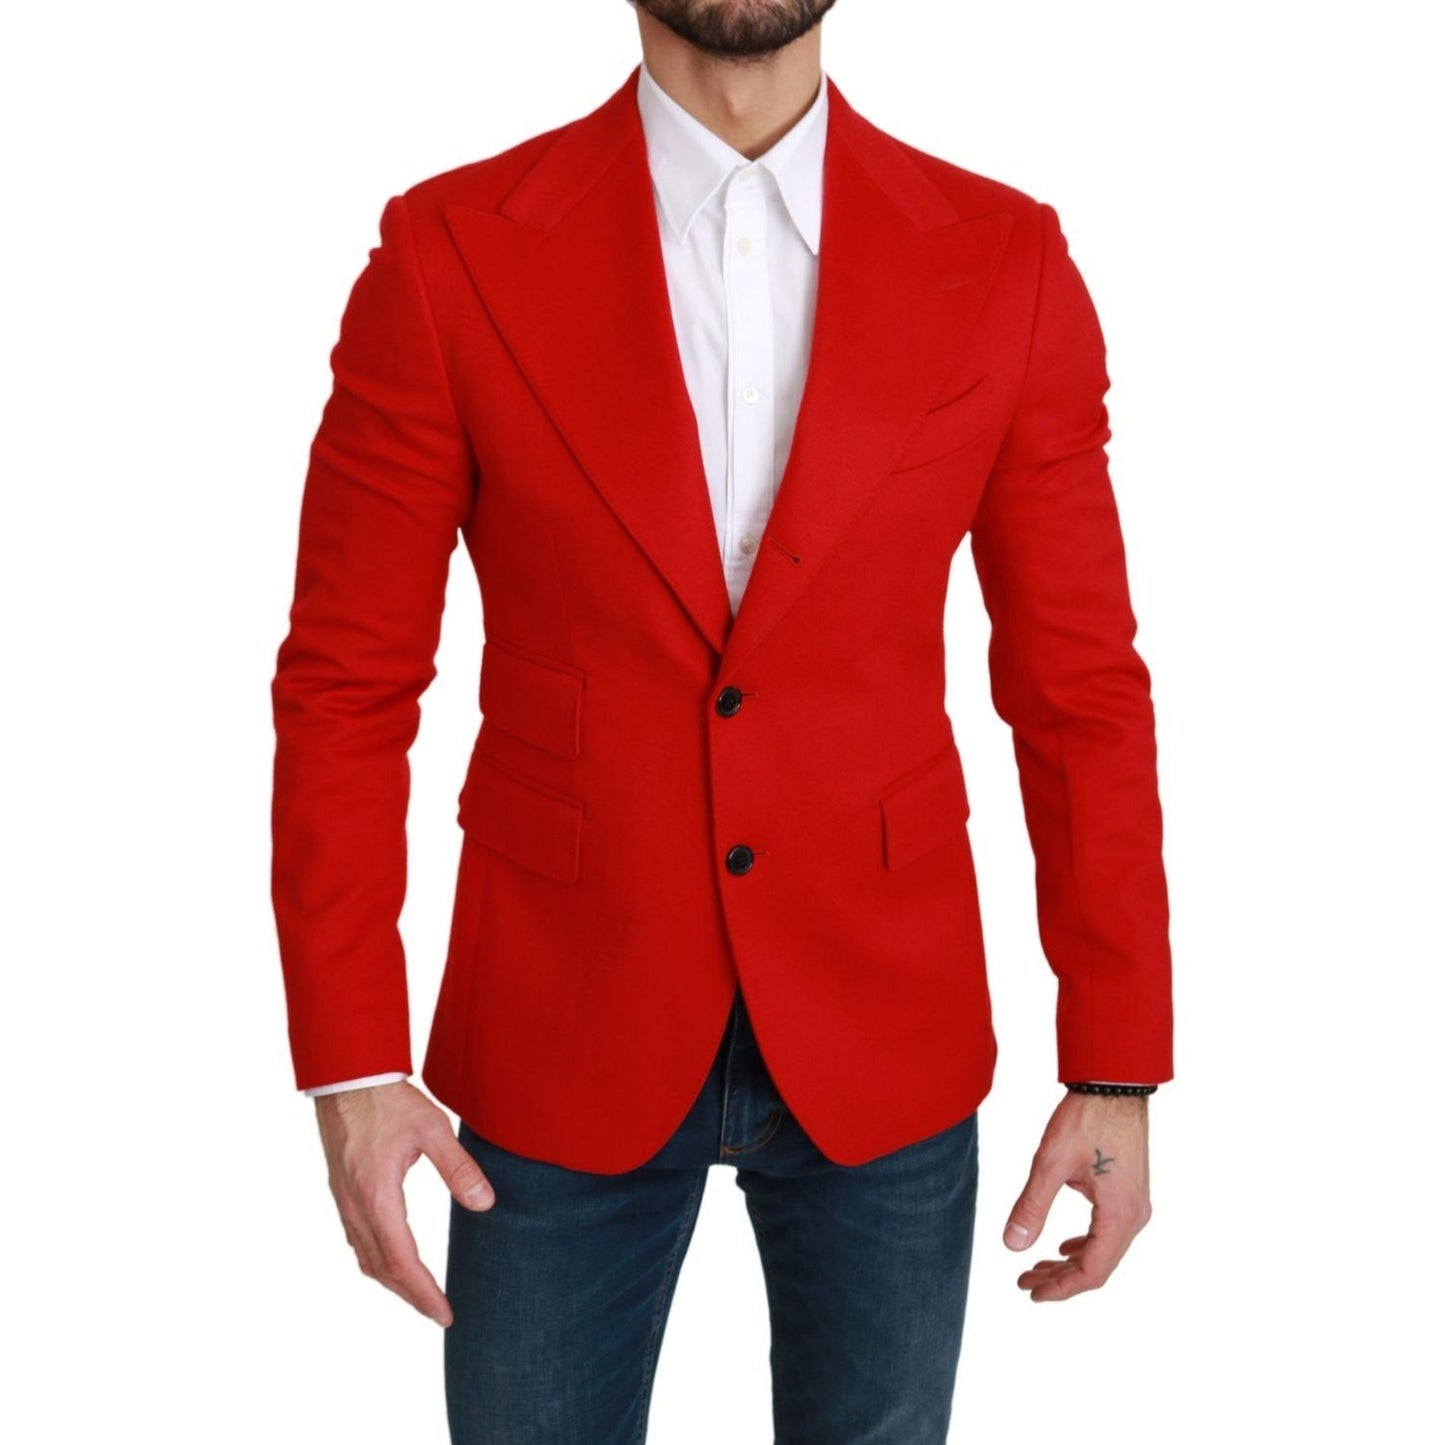 Dolce & Gabbana Elegant Red Cashmere Slim Fit Blazer red-cashmere-slim-fit-coat-jacket-blazer IMG_1214-scaled-139d5d43-f41.jpg